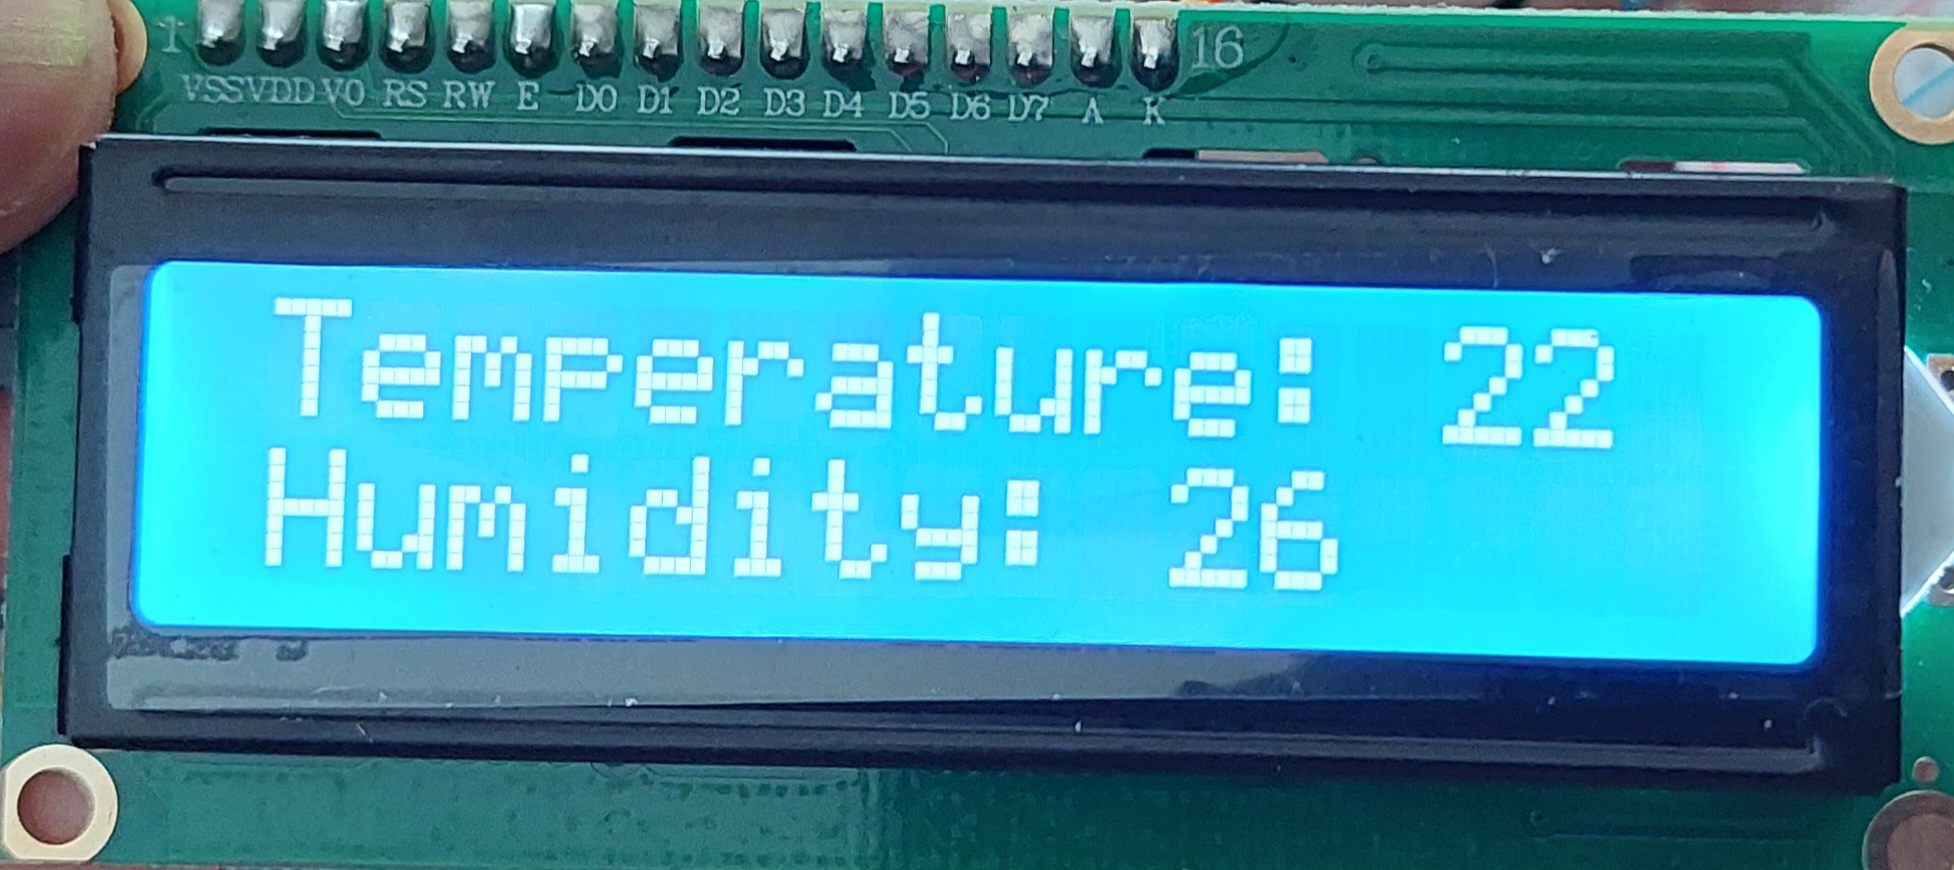 Sensor readings on an LCD